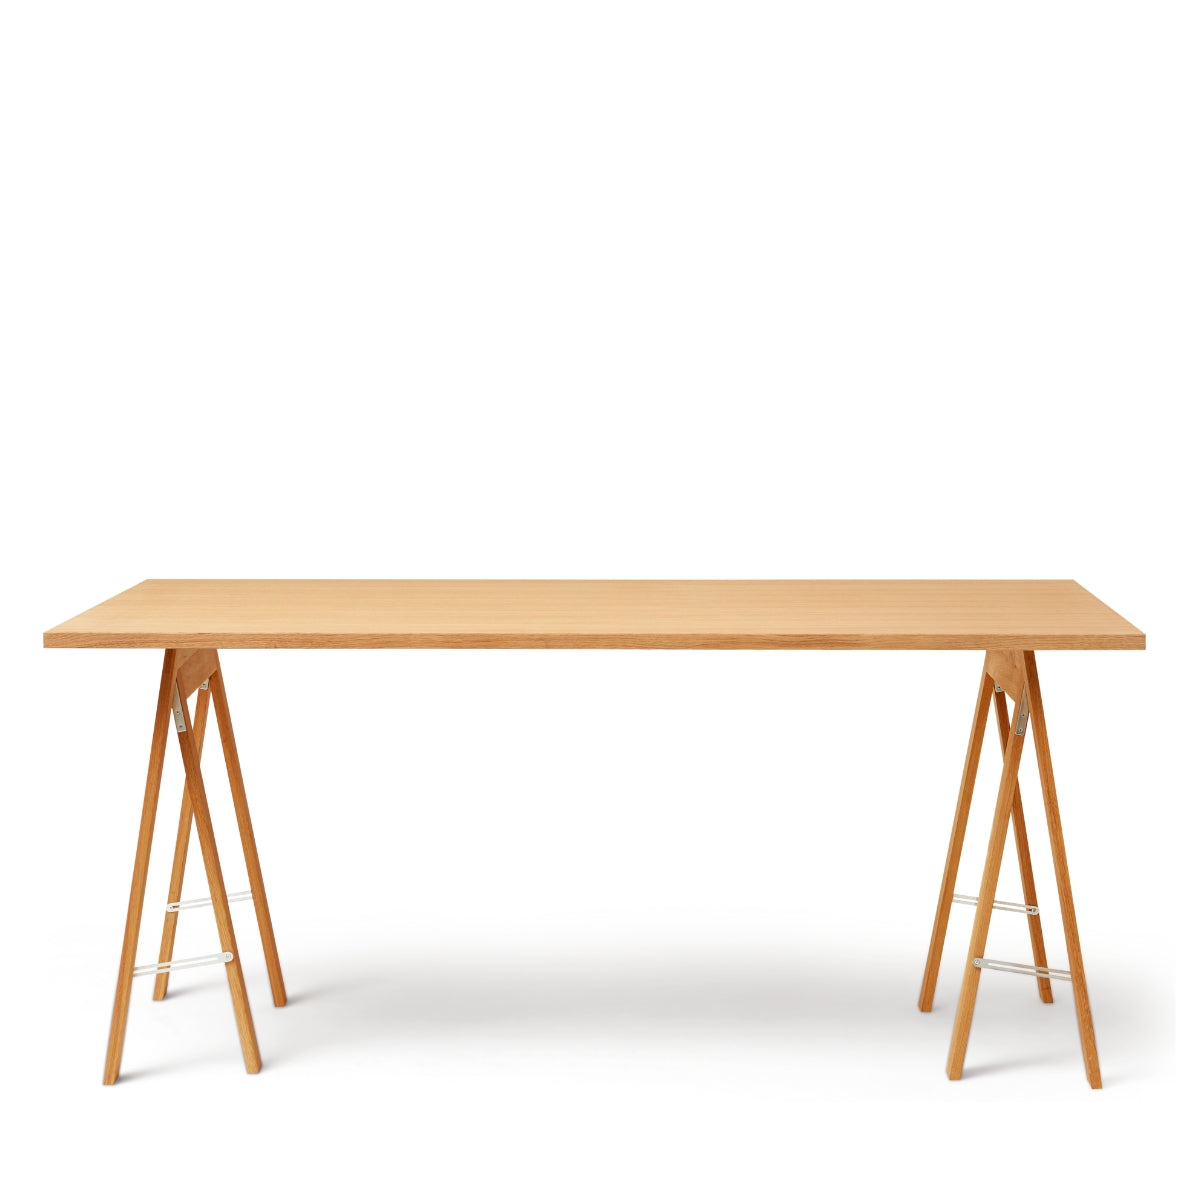 Form & Refine | Linear Tabletop - 165 x 88 cm